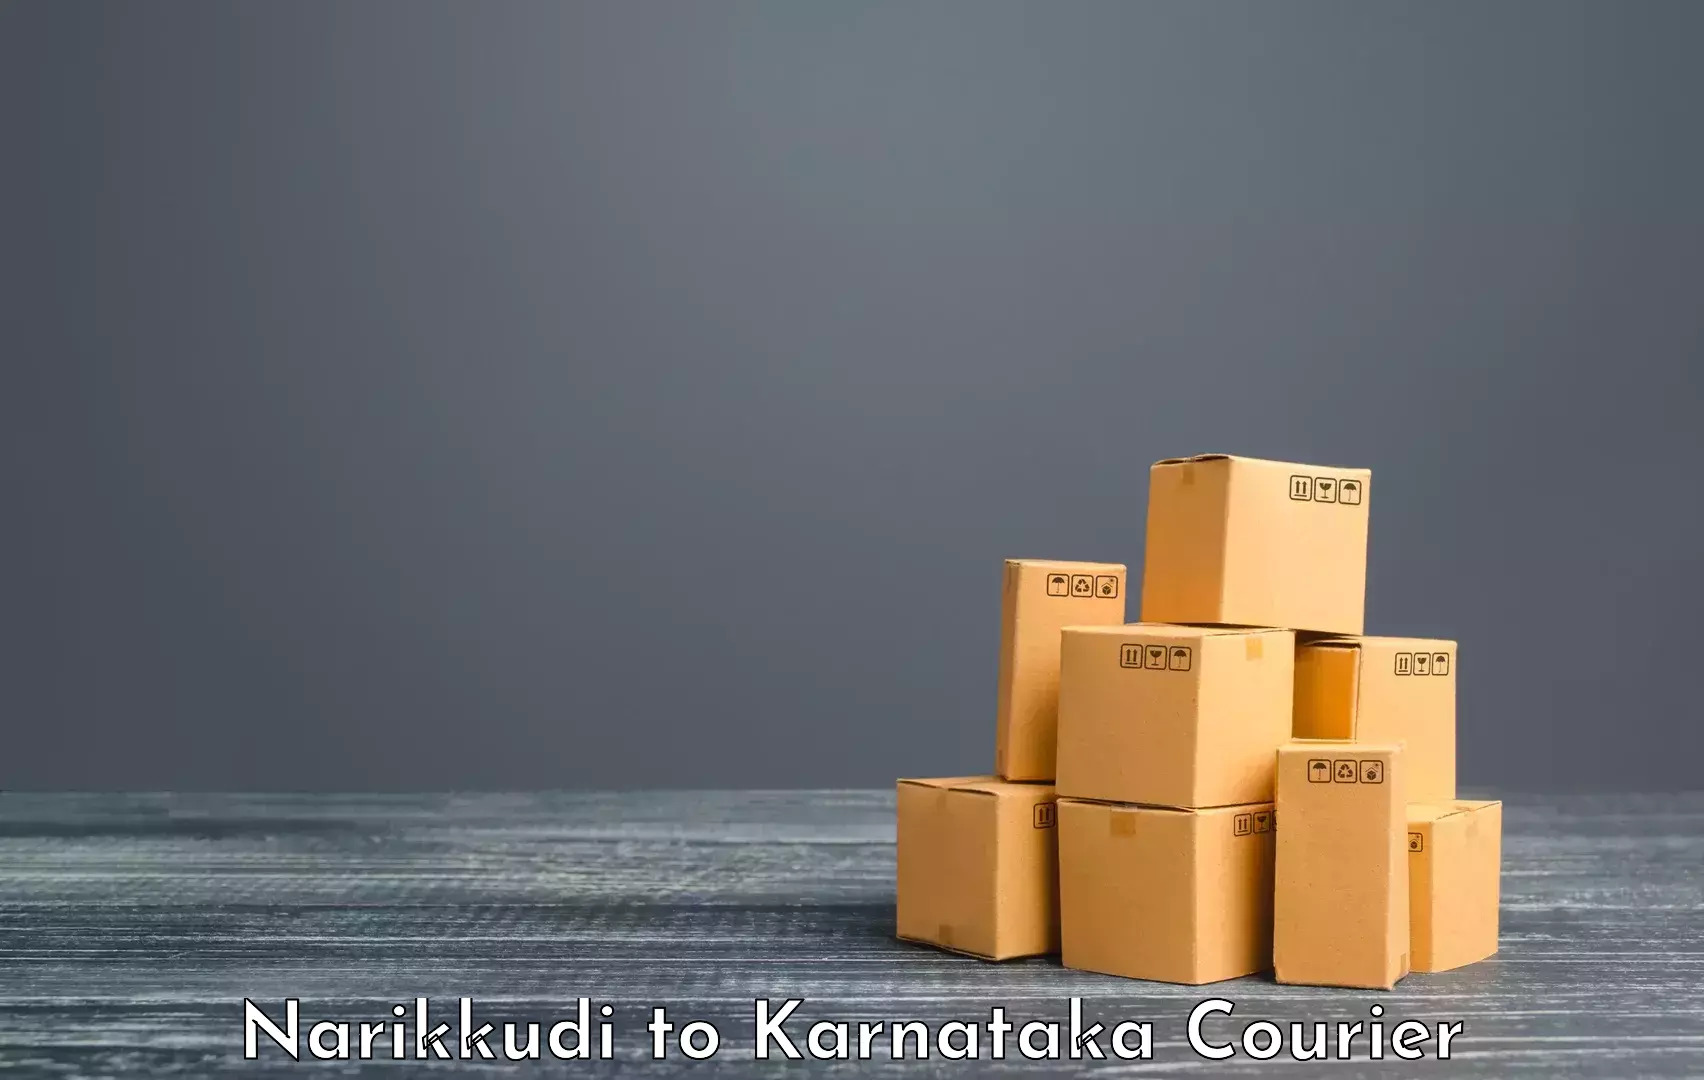 Luggage shipment tracking Narikkudi to Karnataka